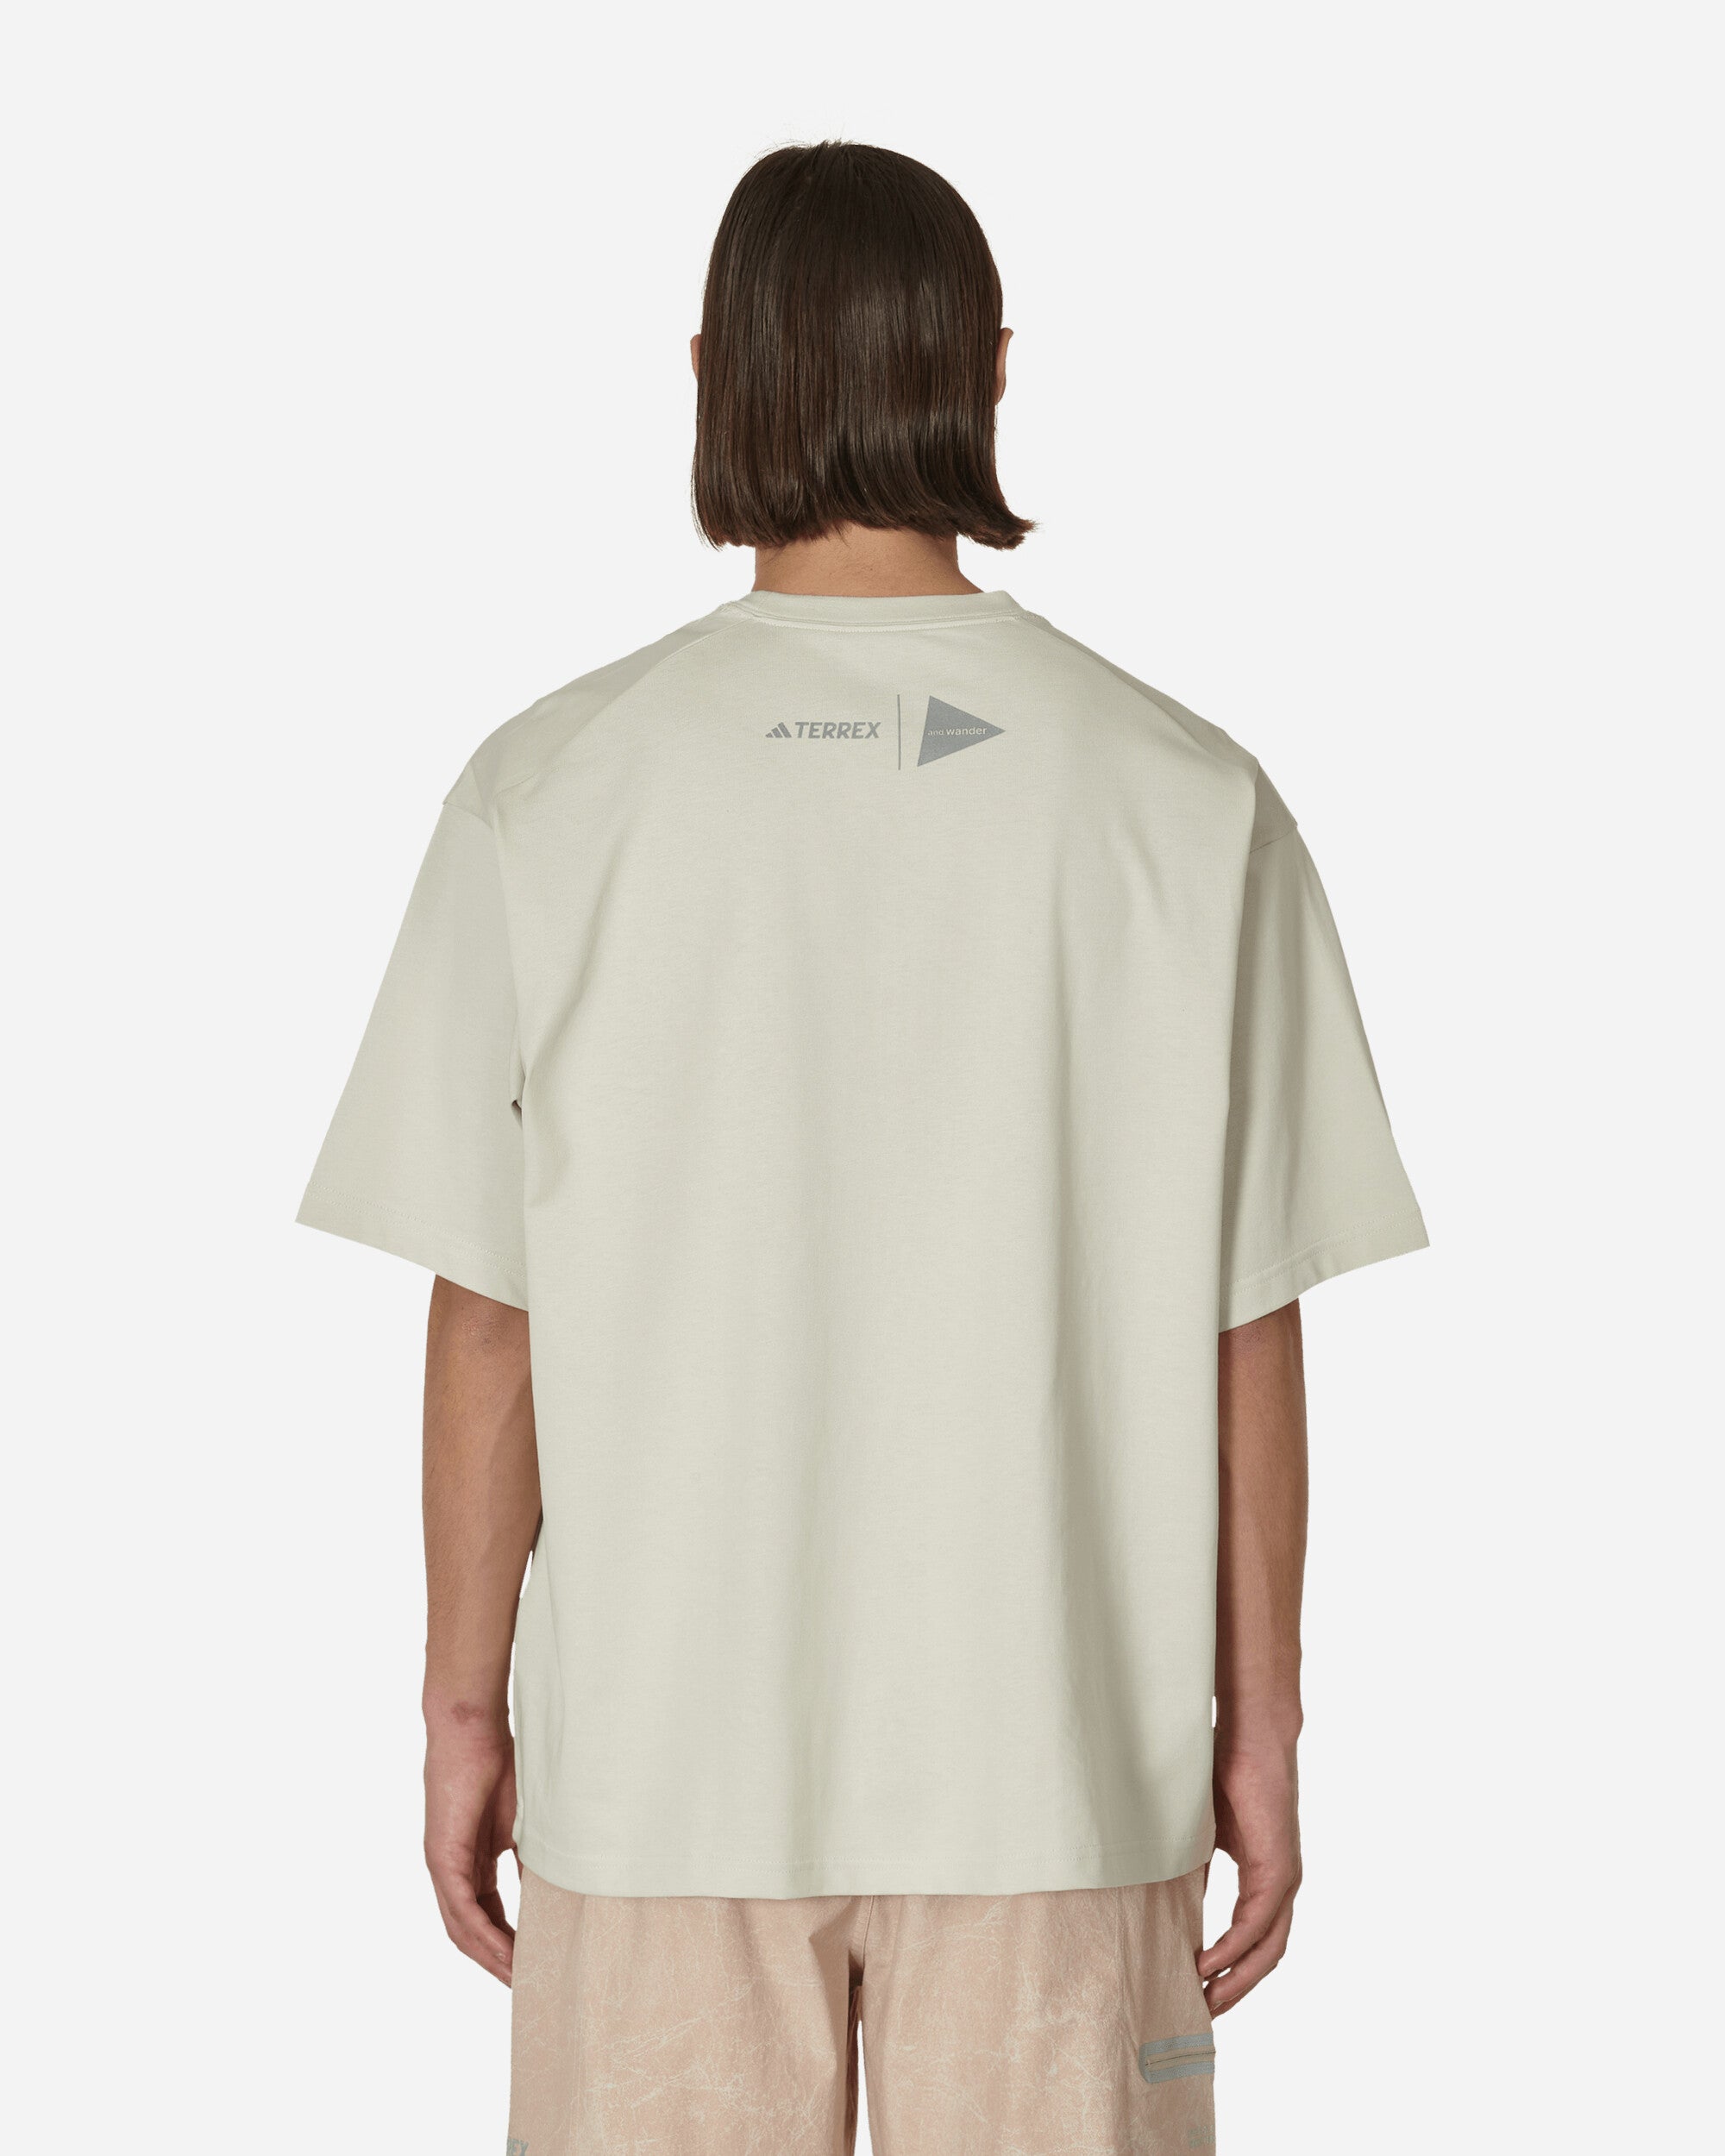 adidas Awd Graph S Alumina T-Shirts Shortsleeve HR7141 001